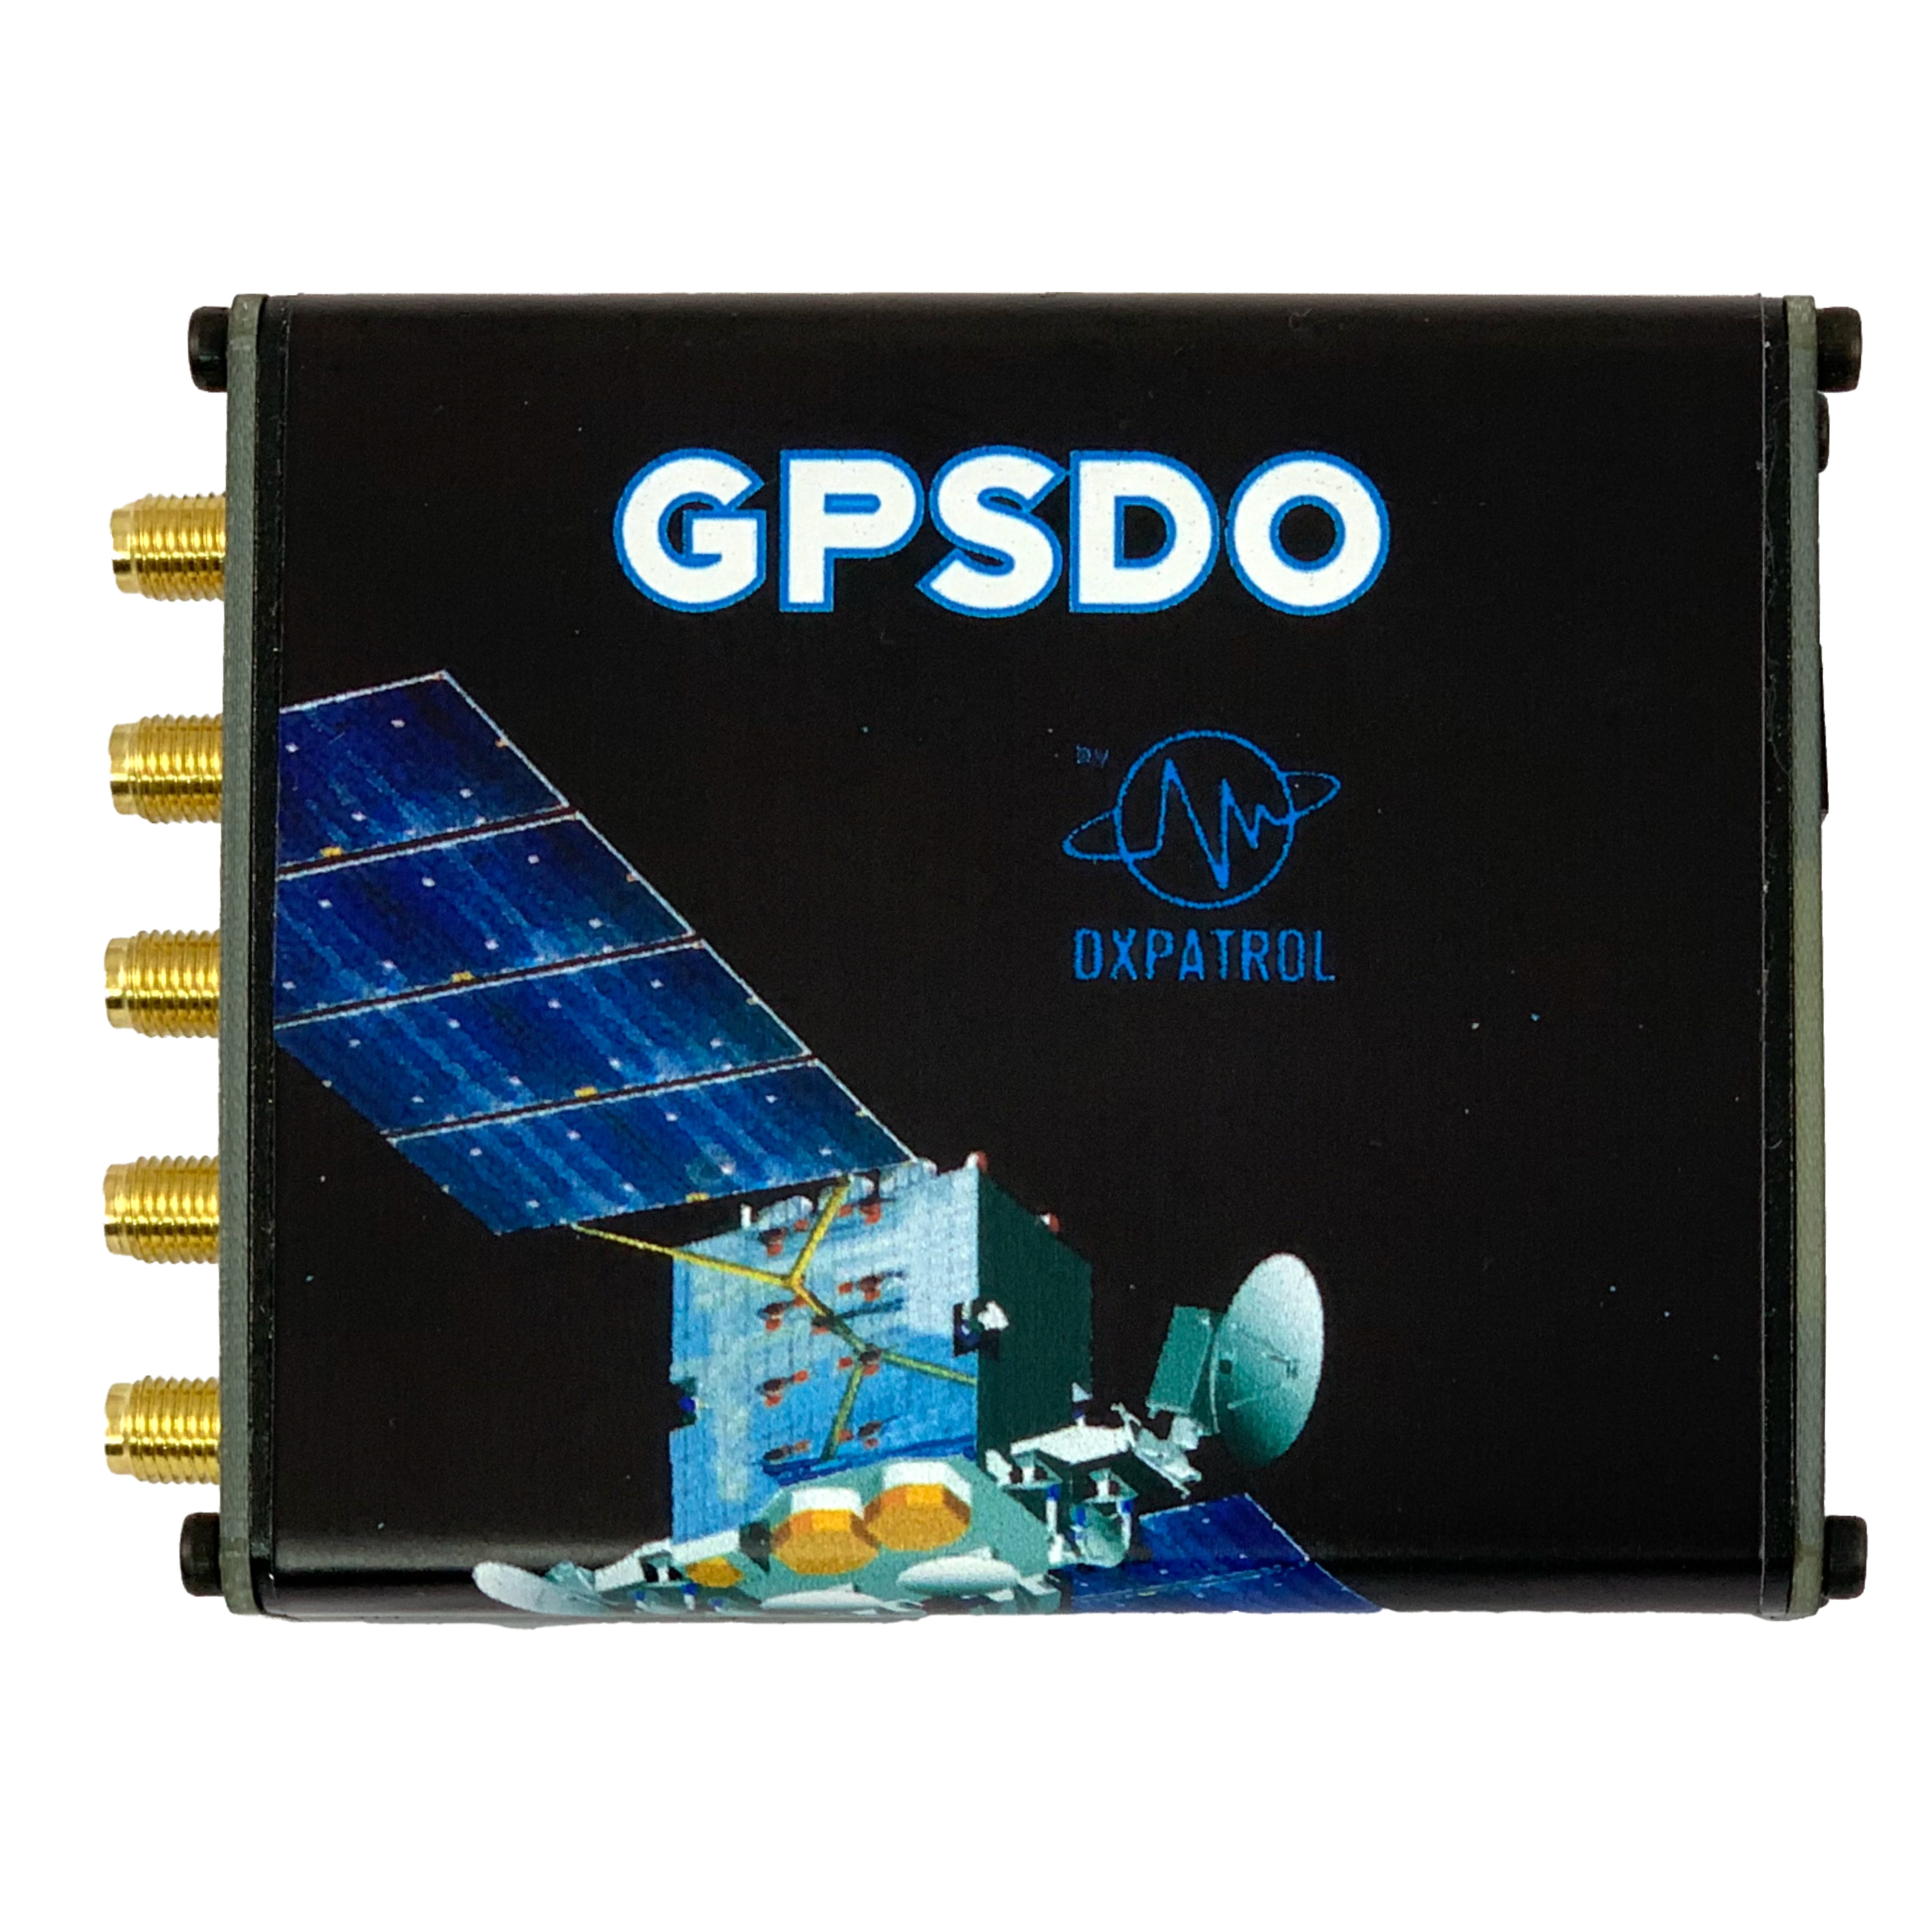 DXPatrol GPSDO 2.0 GPS disziplinierter Normaloszillator mit Oled Display